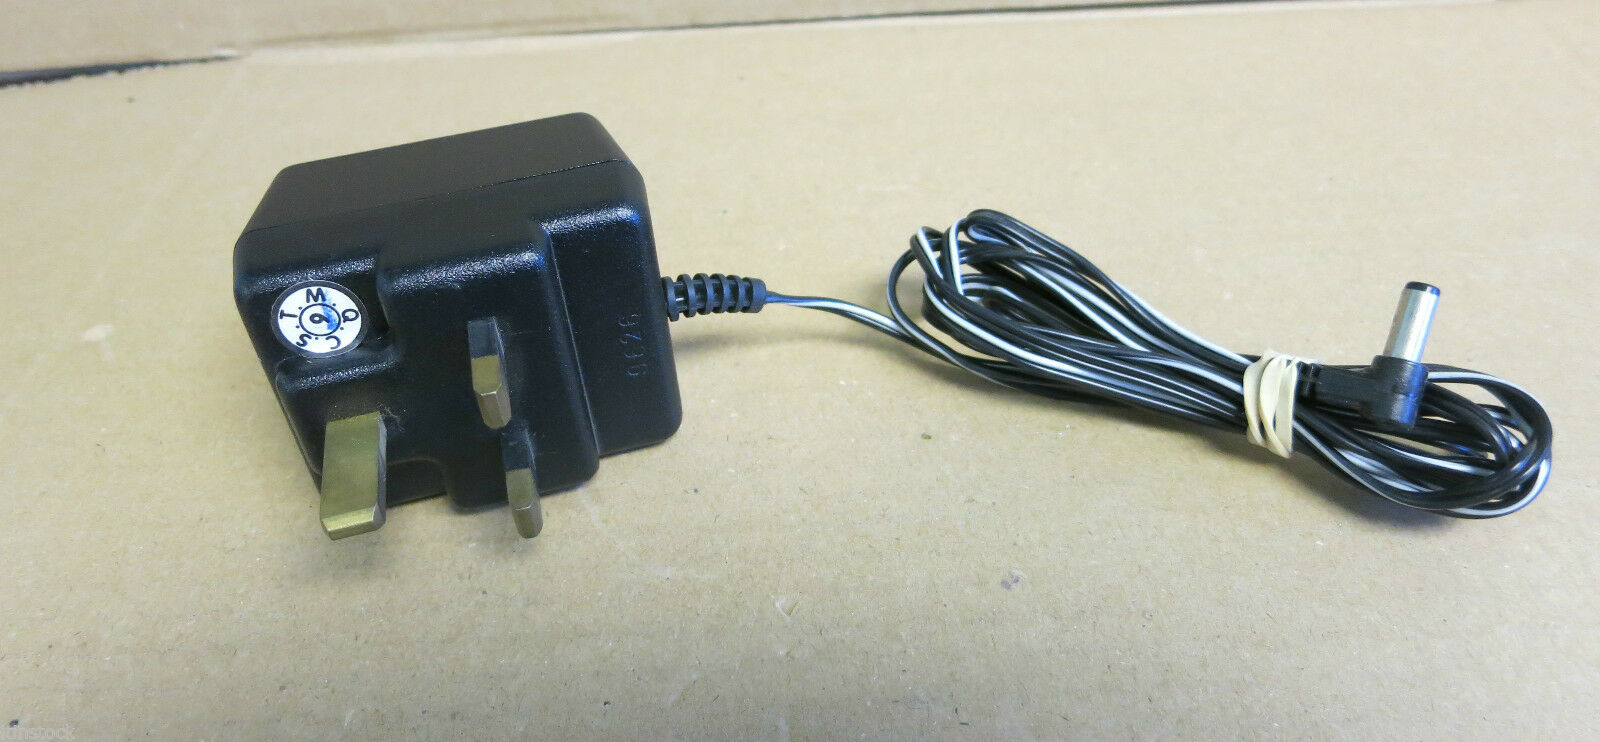 Phone Mate AC Power Adapter 9V 450mA 9W UK 3 Pin Plug - Model: SB41-206BS Type: AC Power Adapter MPN: SB41-206BS Bra